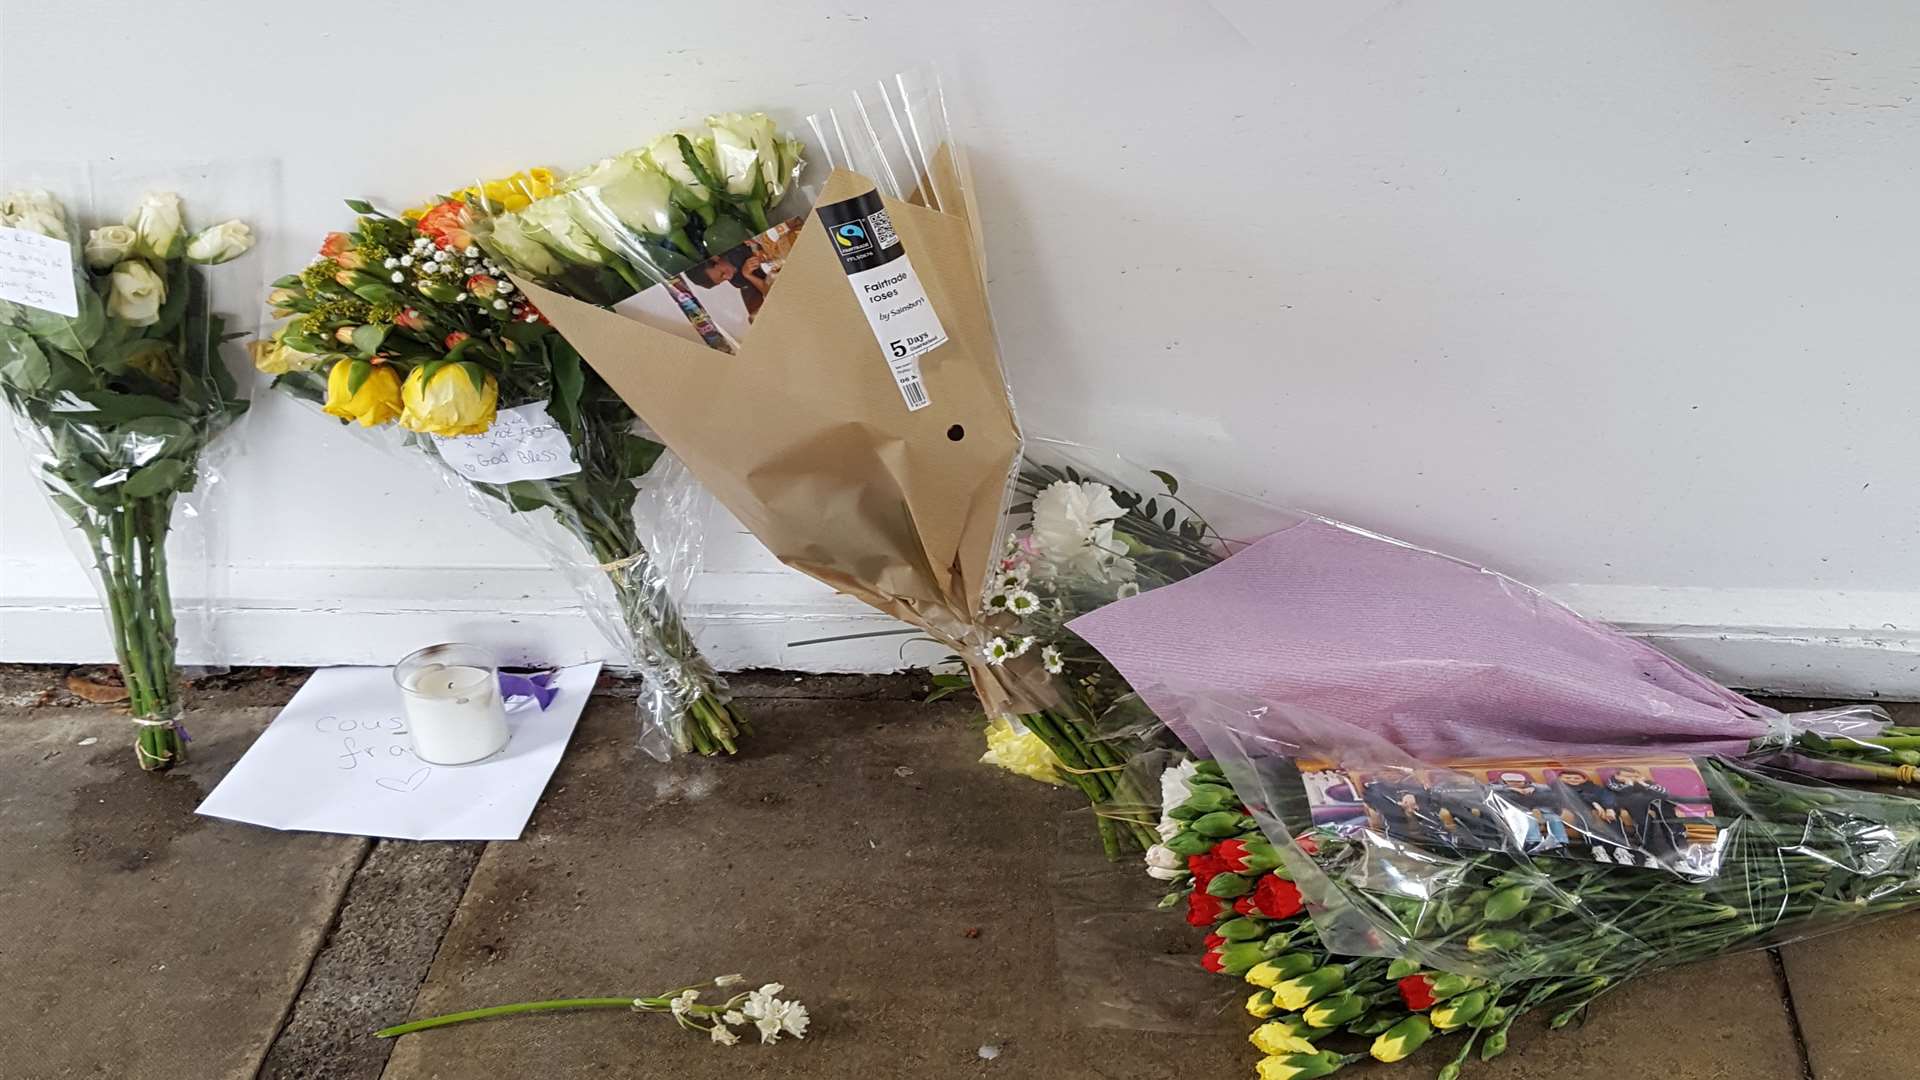 Flowers were left in memory of Frank Brown